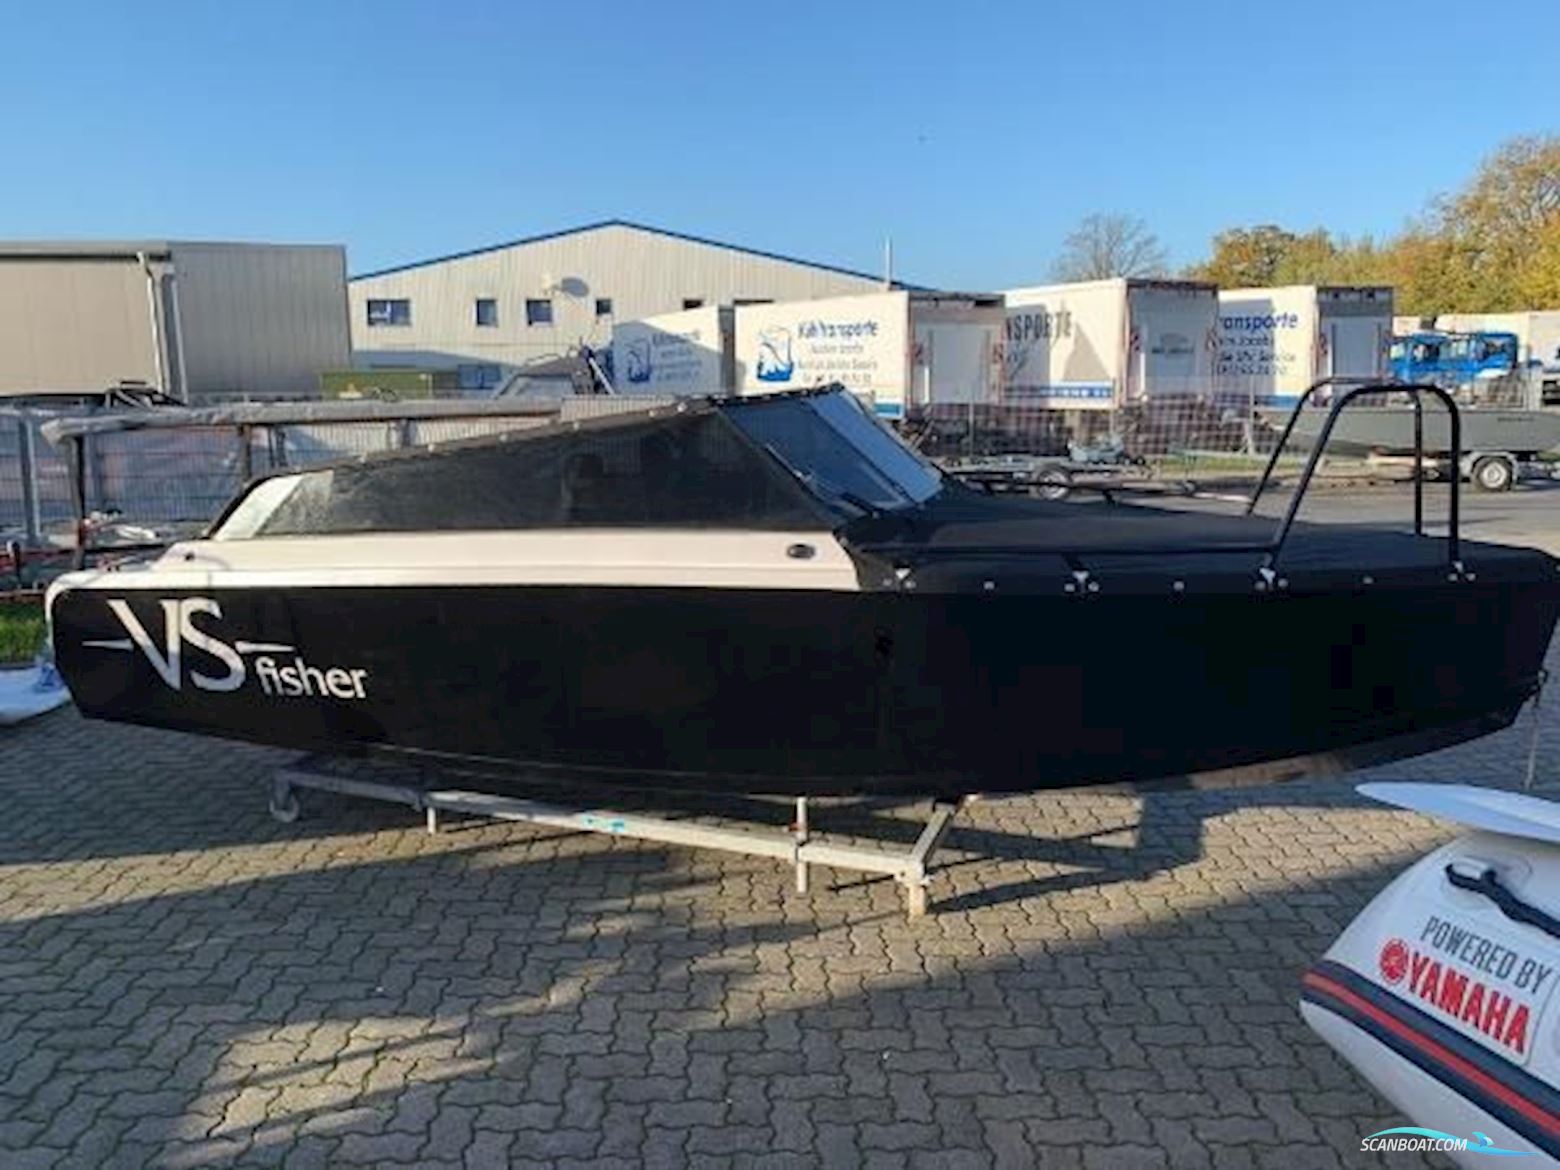 Einzelbau VS Fisher Motor boat 2022, Germany